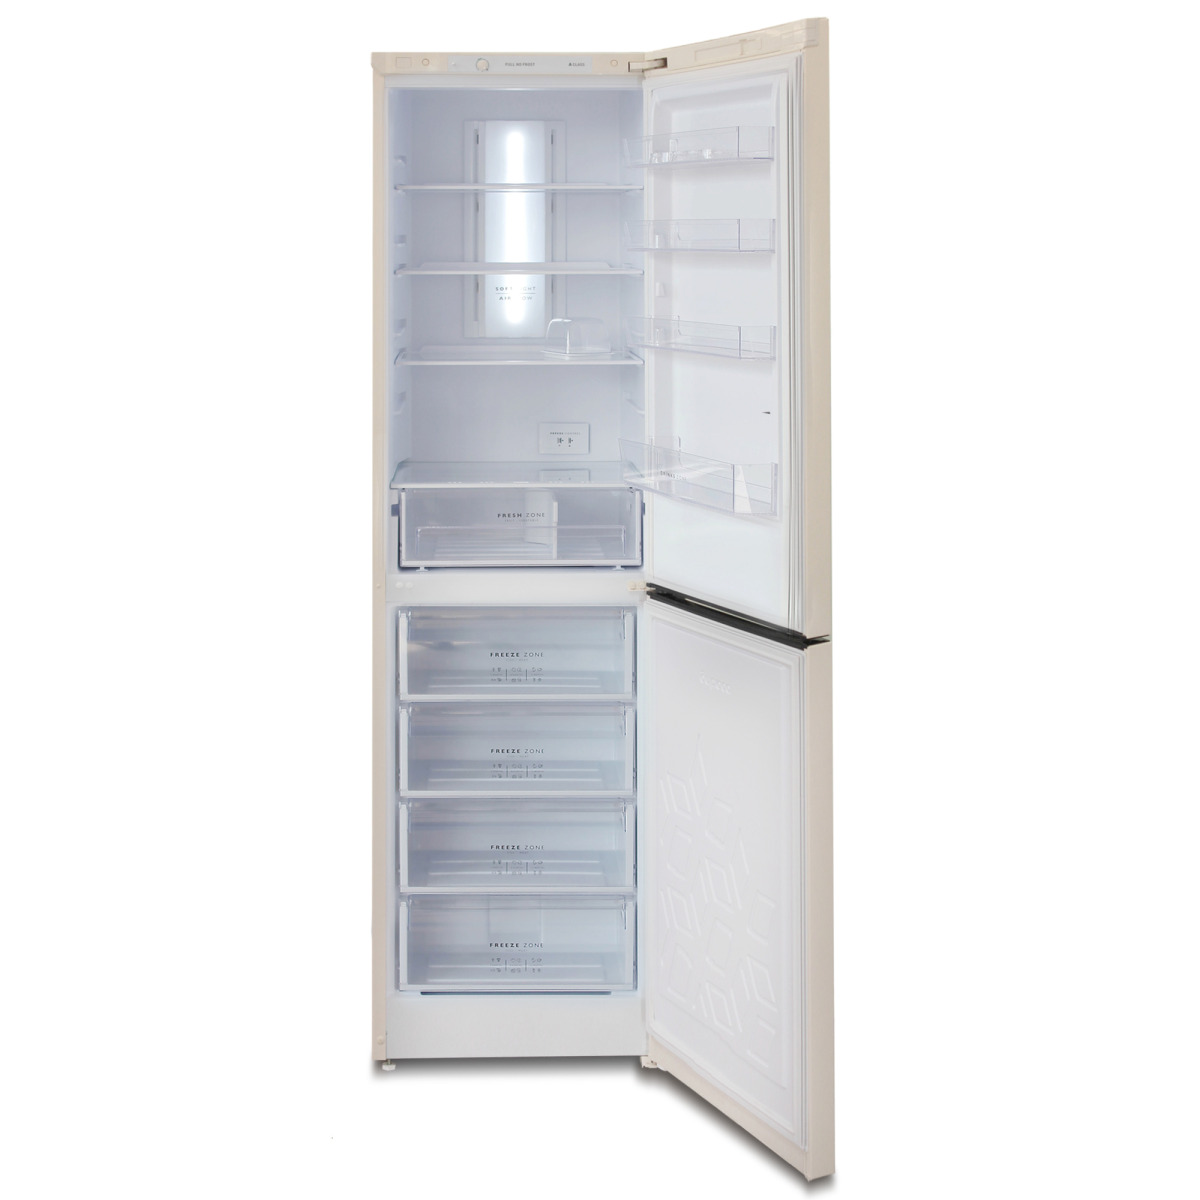 Бирюса G 880 NF  Холодильник - уменьшенная 7